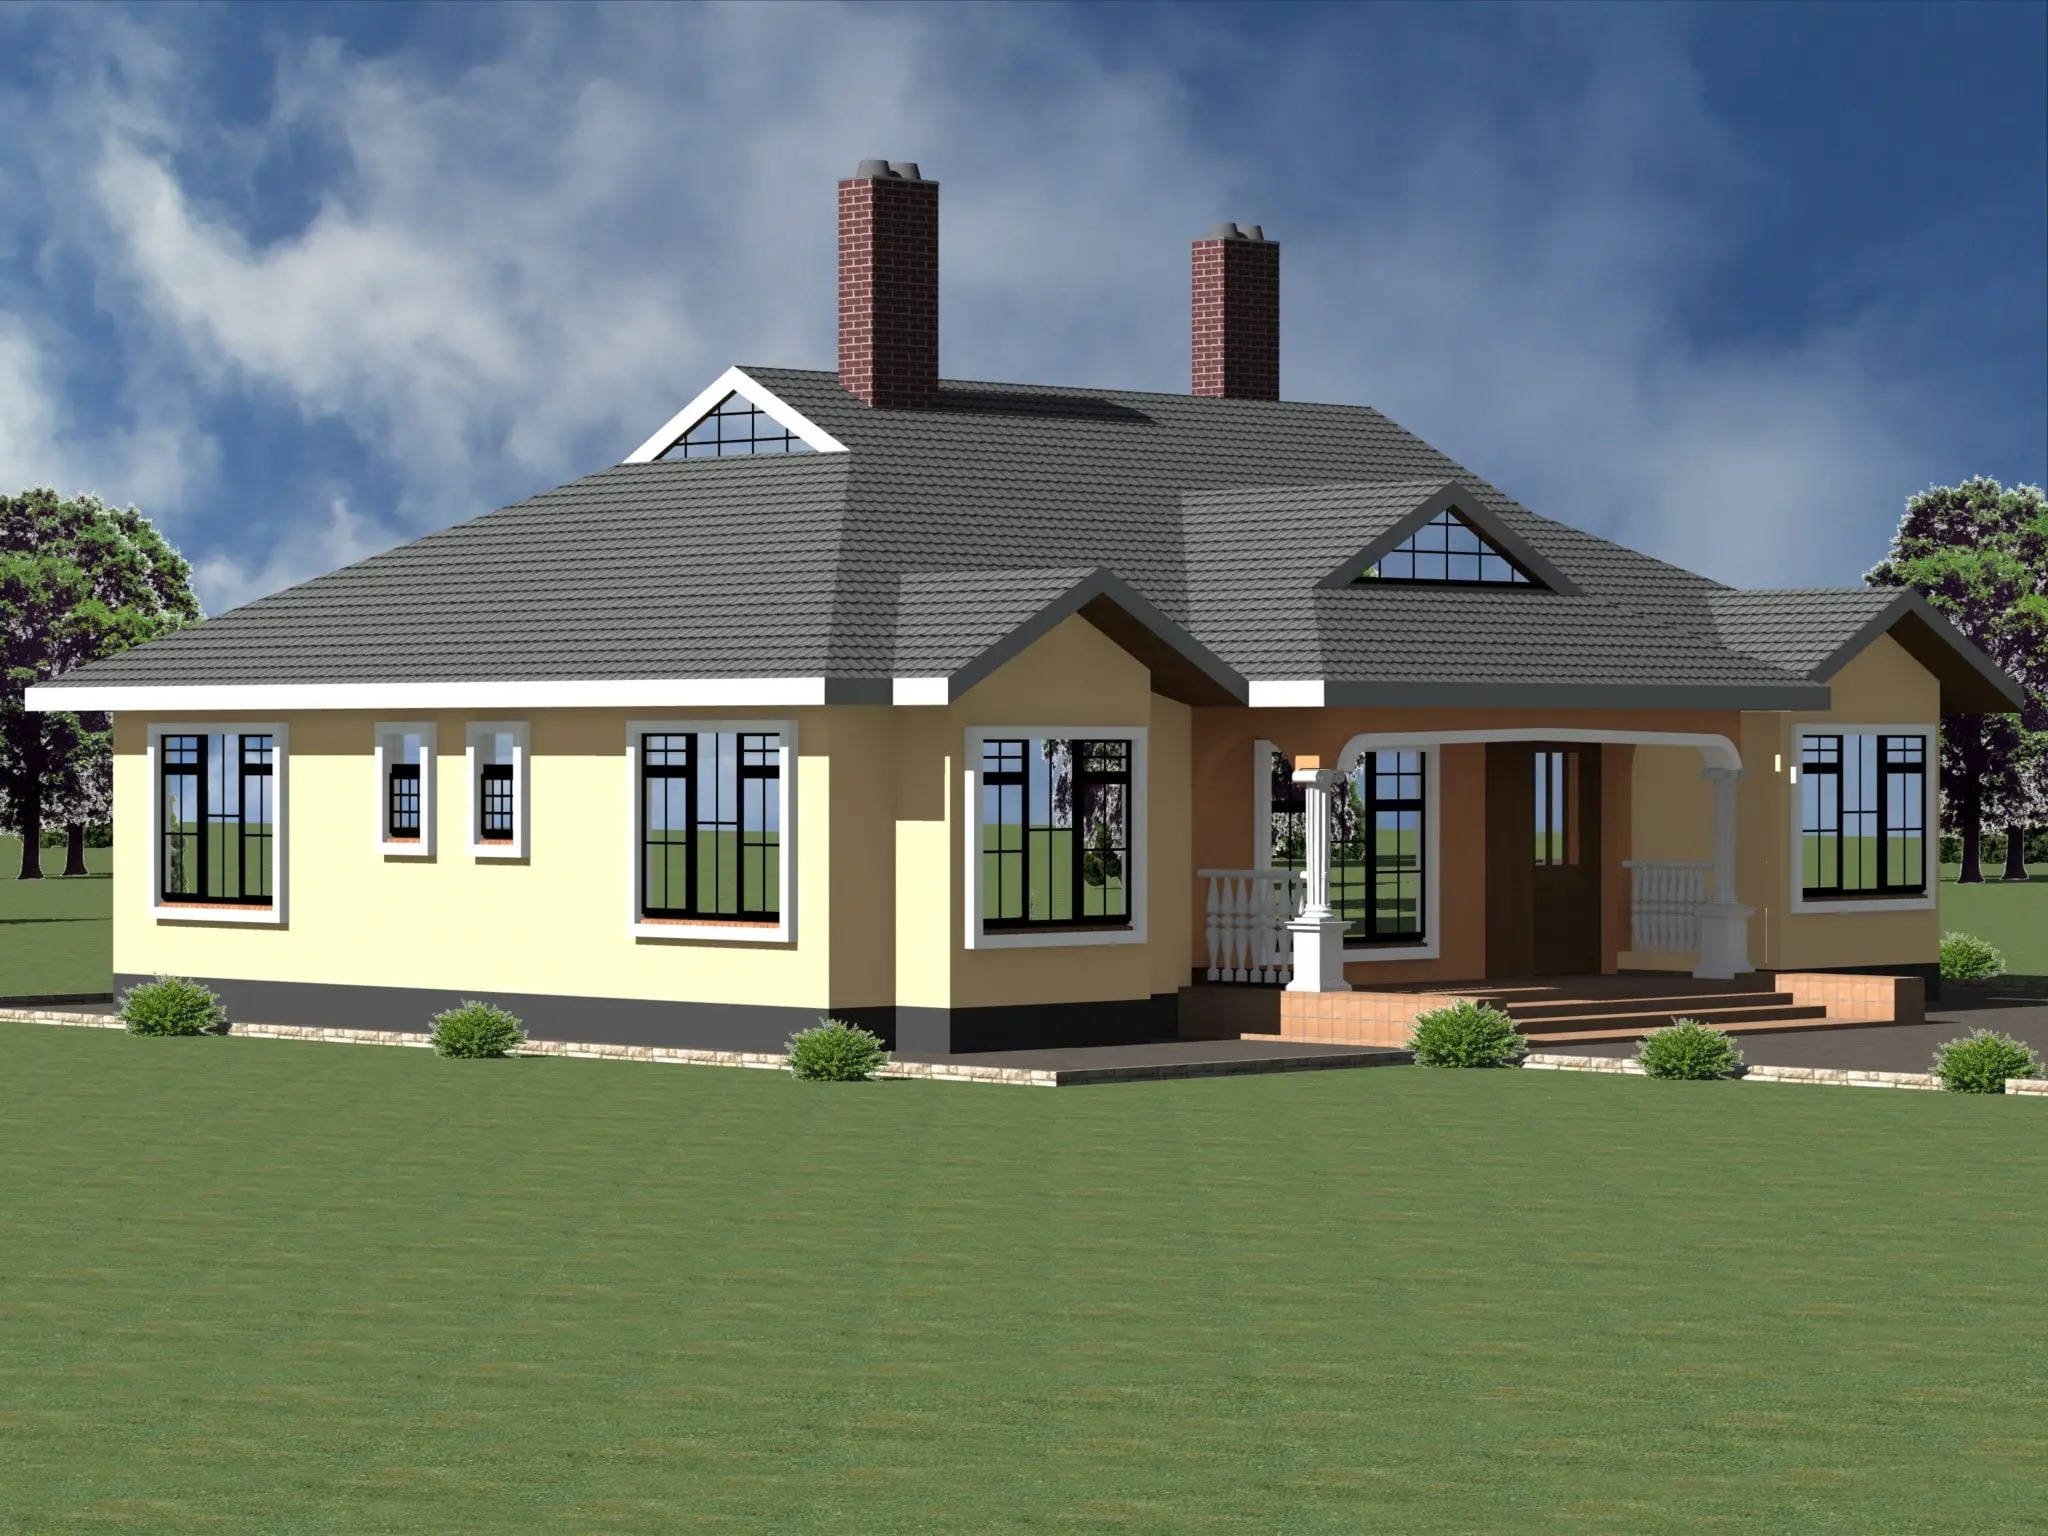 Wonderful some best house plans in kenya: 3 bedrooms bungalows| hpd for stunning modern house plans in kenya